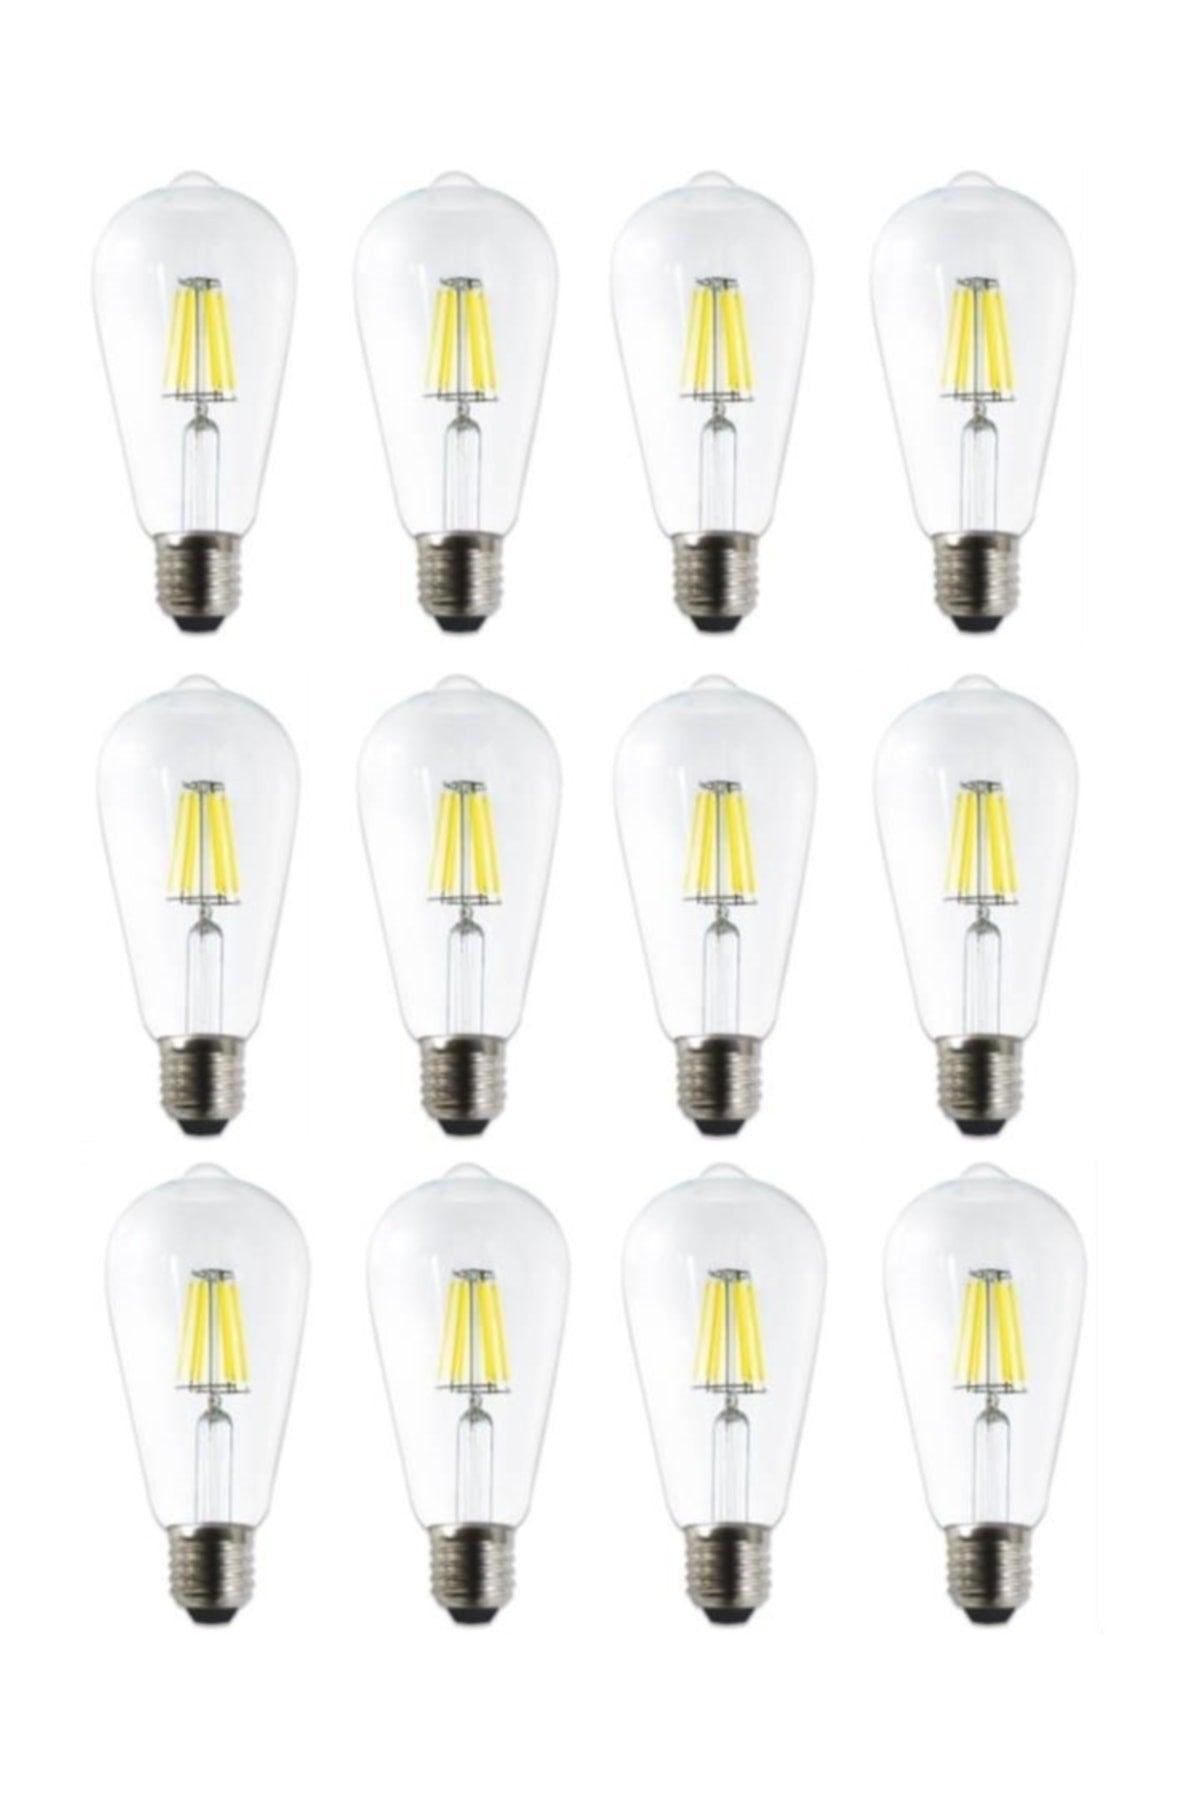 6w Filament Rustic Led Bulb Yellow Light E27